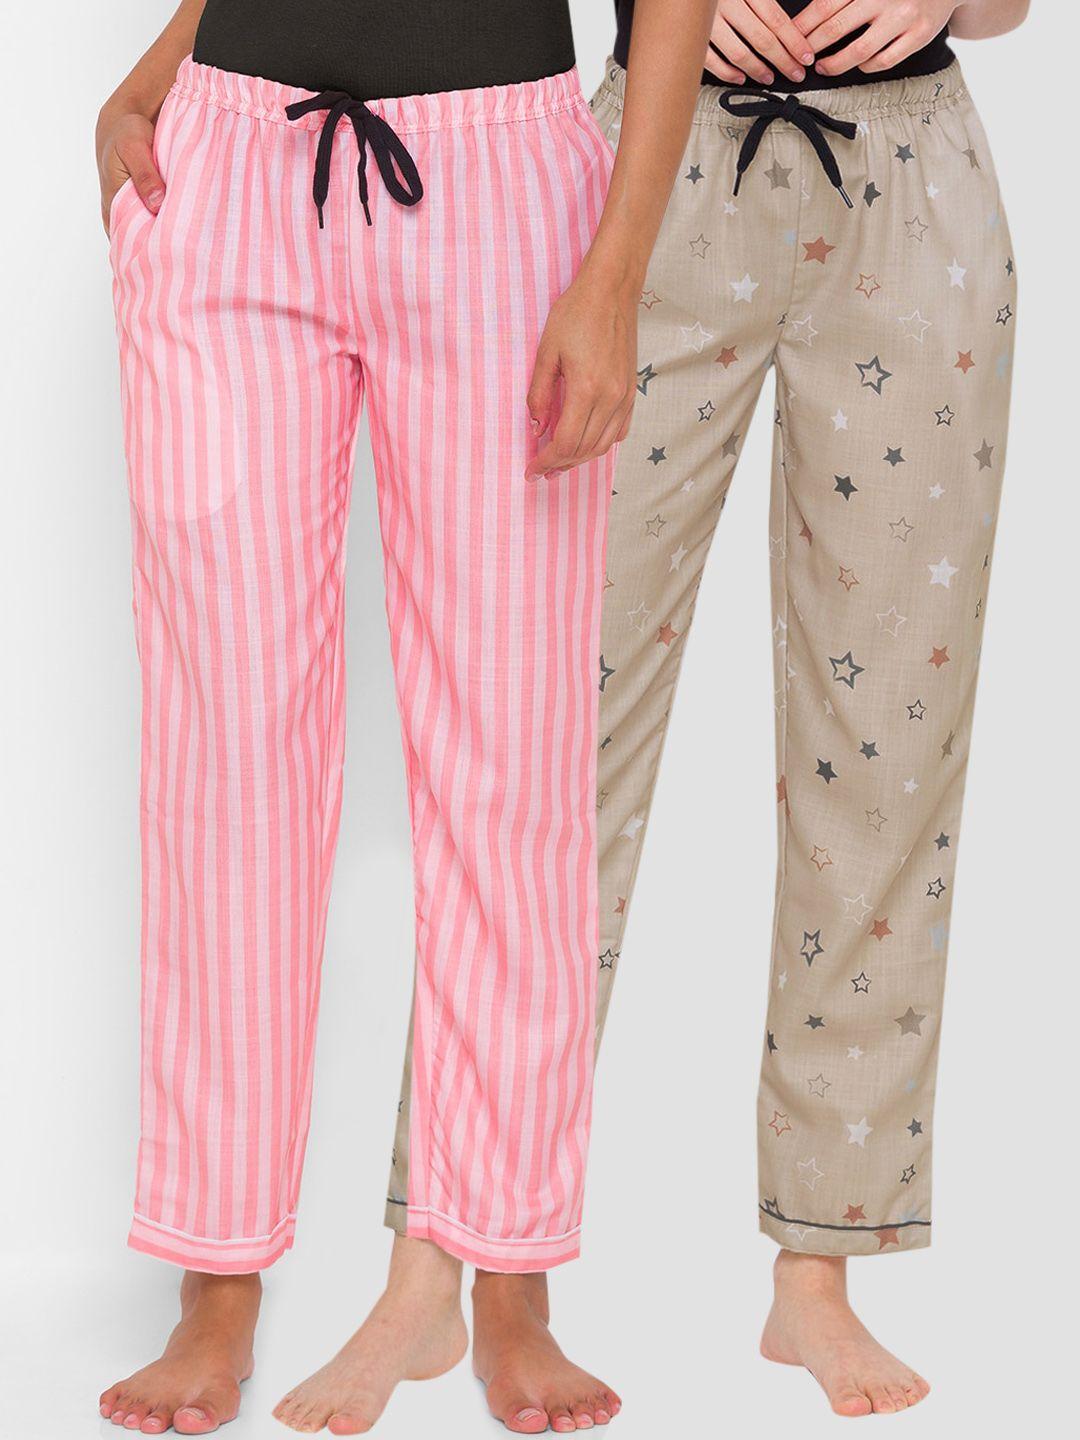 fashionrack woman set of 2 beige & pink striped lounge pants